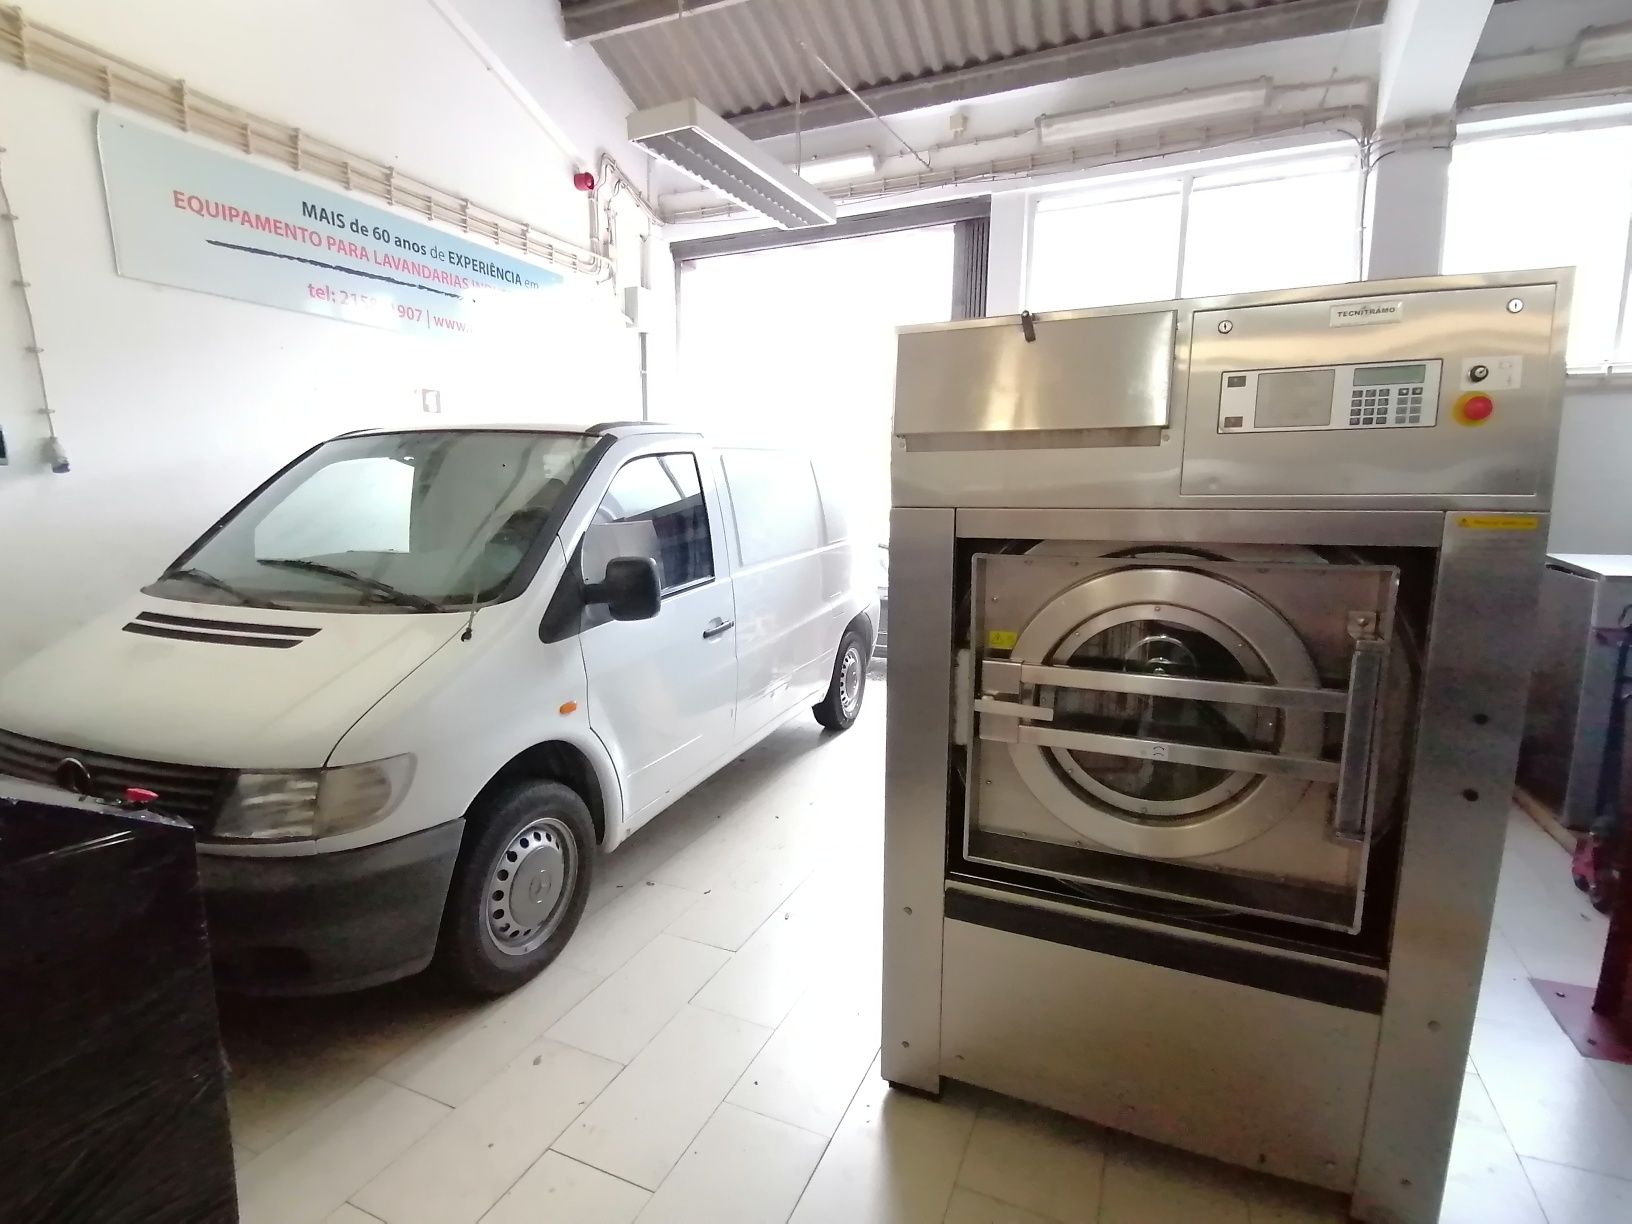 Máquina para lavandaria industrial e comerciais Tecnitramo Portugal